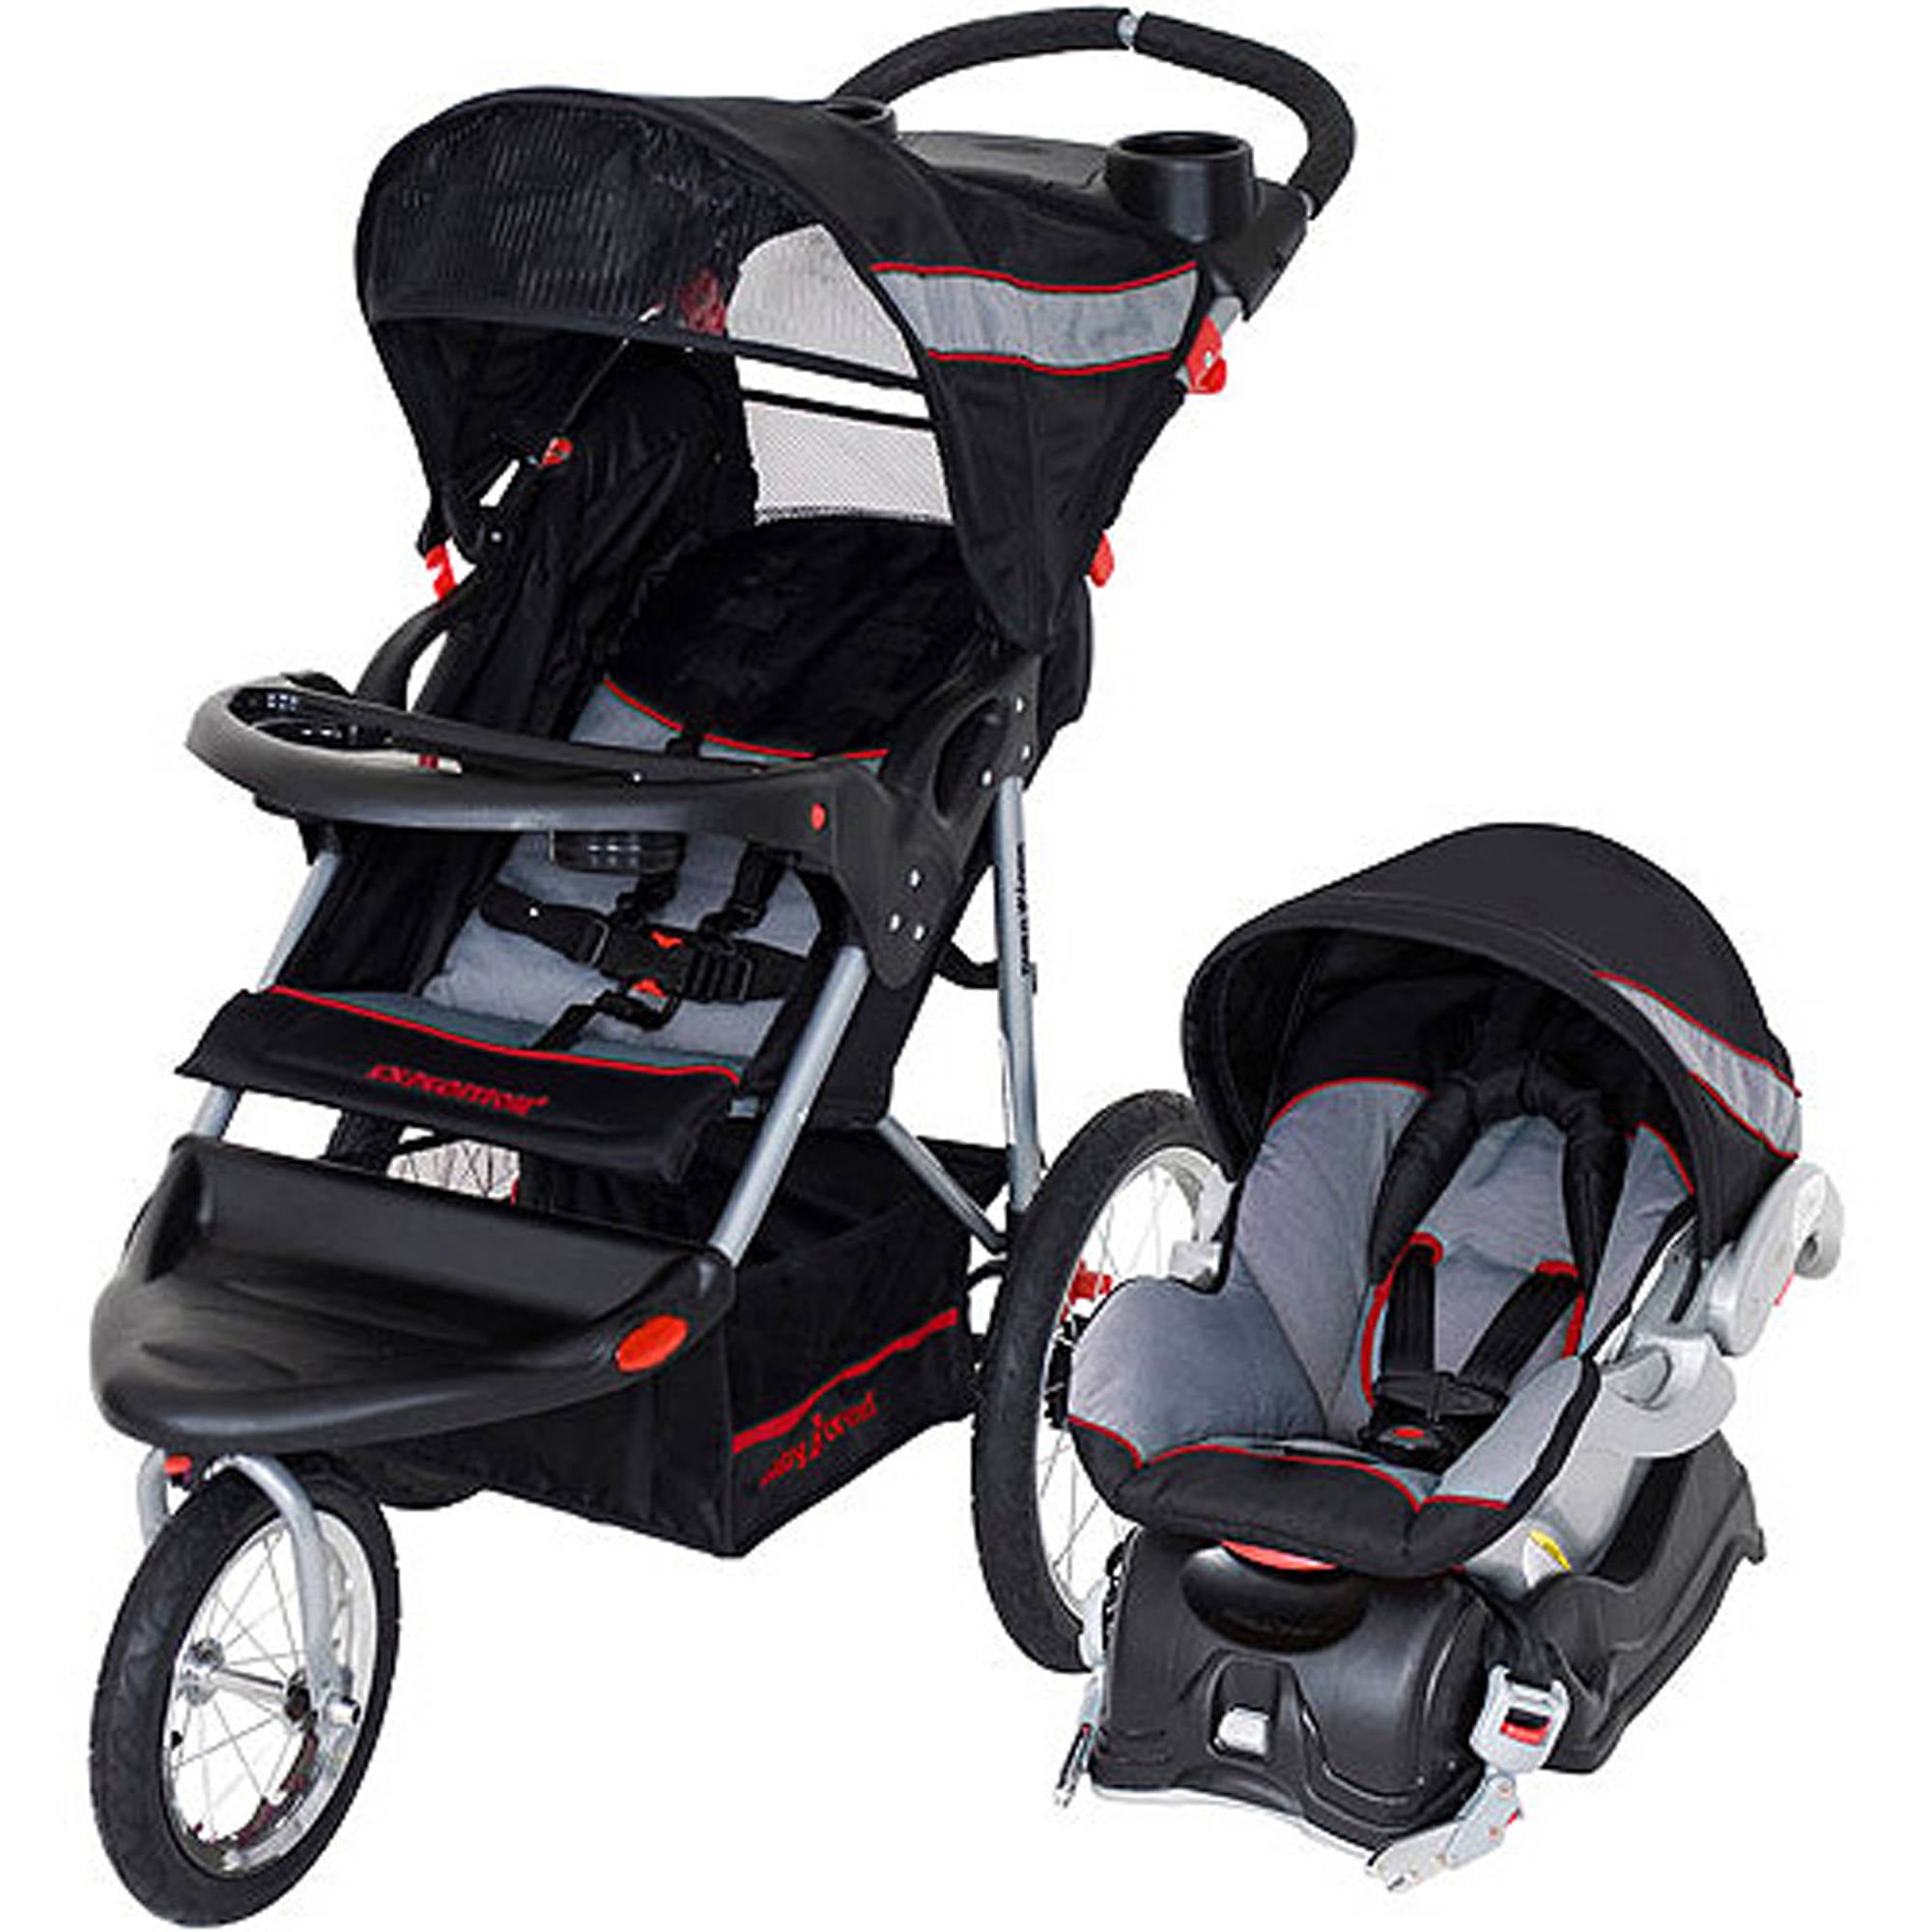 Infant Travel System Combo Set Baby Trend Stroller Playard High Chair Diaper Bag 